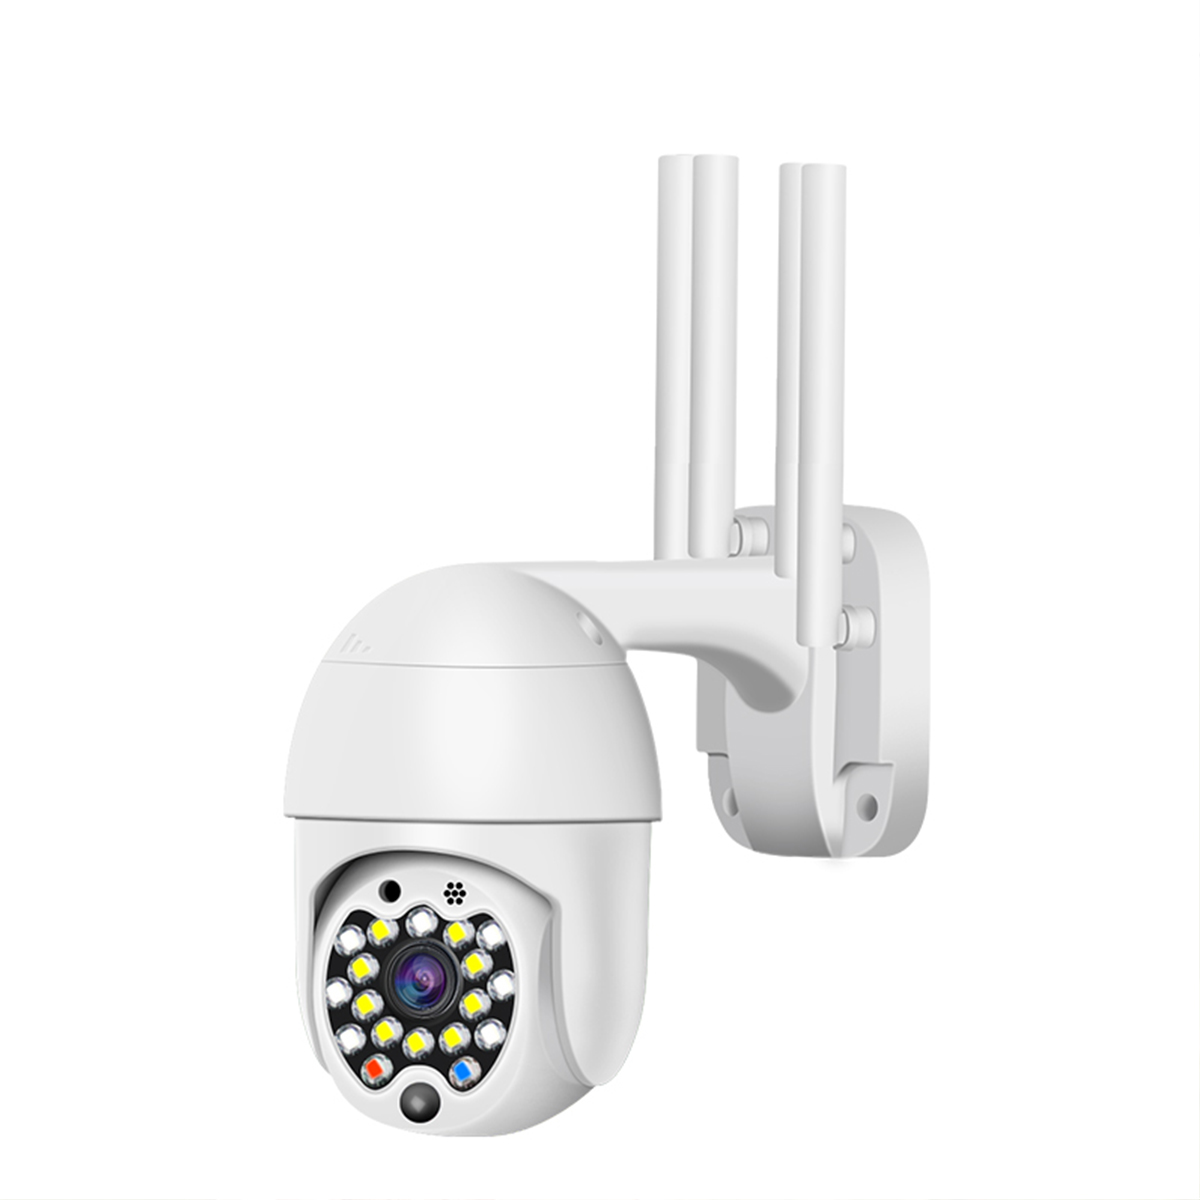 

18 LED Light 1080P HD WiFi IP Security Outdoor Camera Onvif Waterproof IR Night Vision RJ45 Autotrack Intercom Monitorin